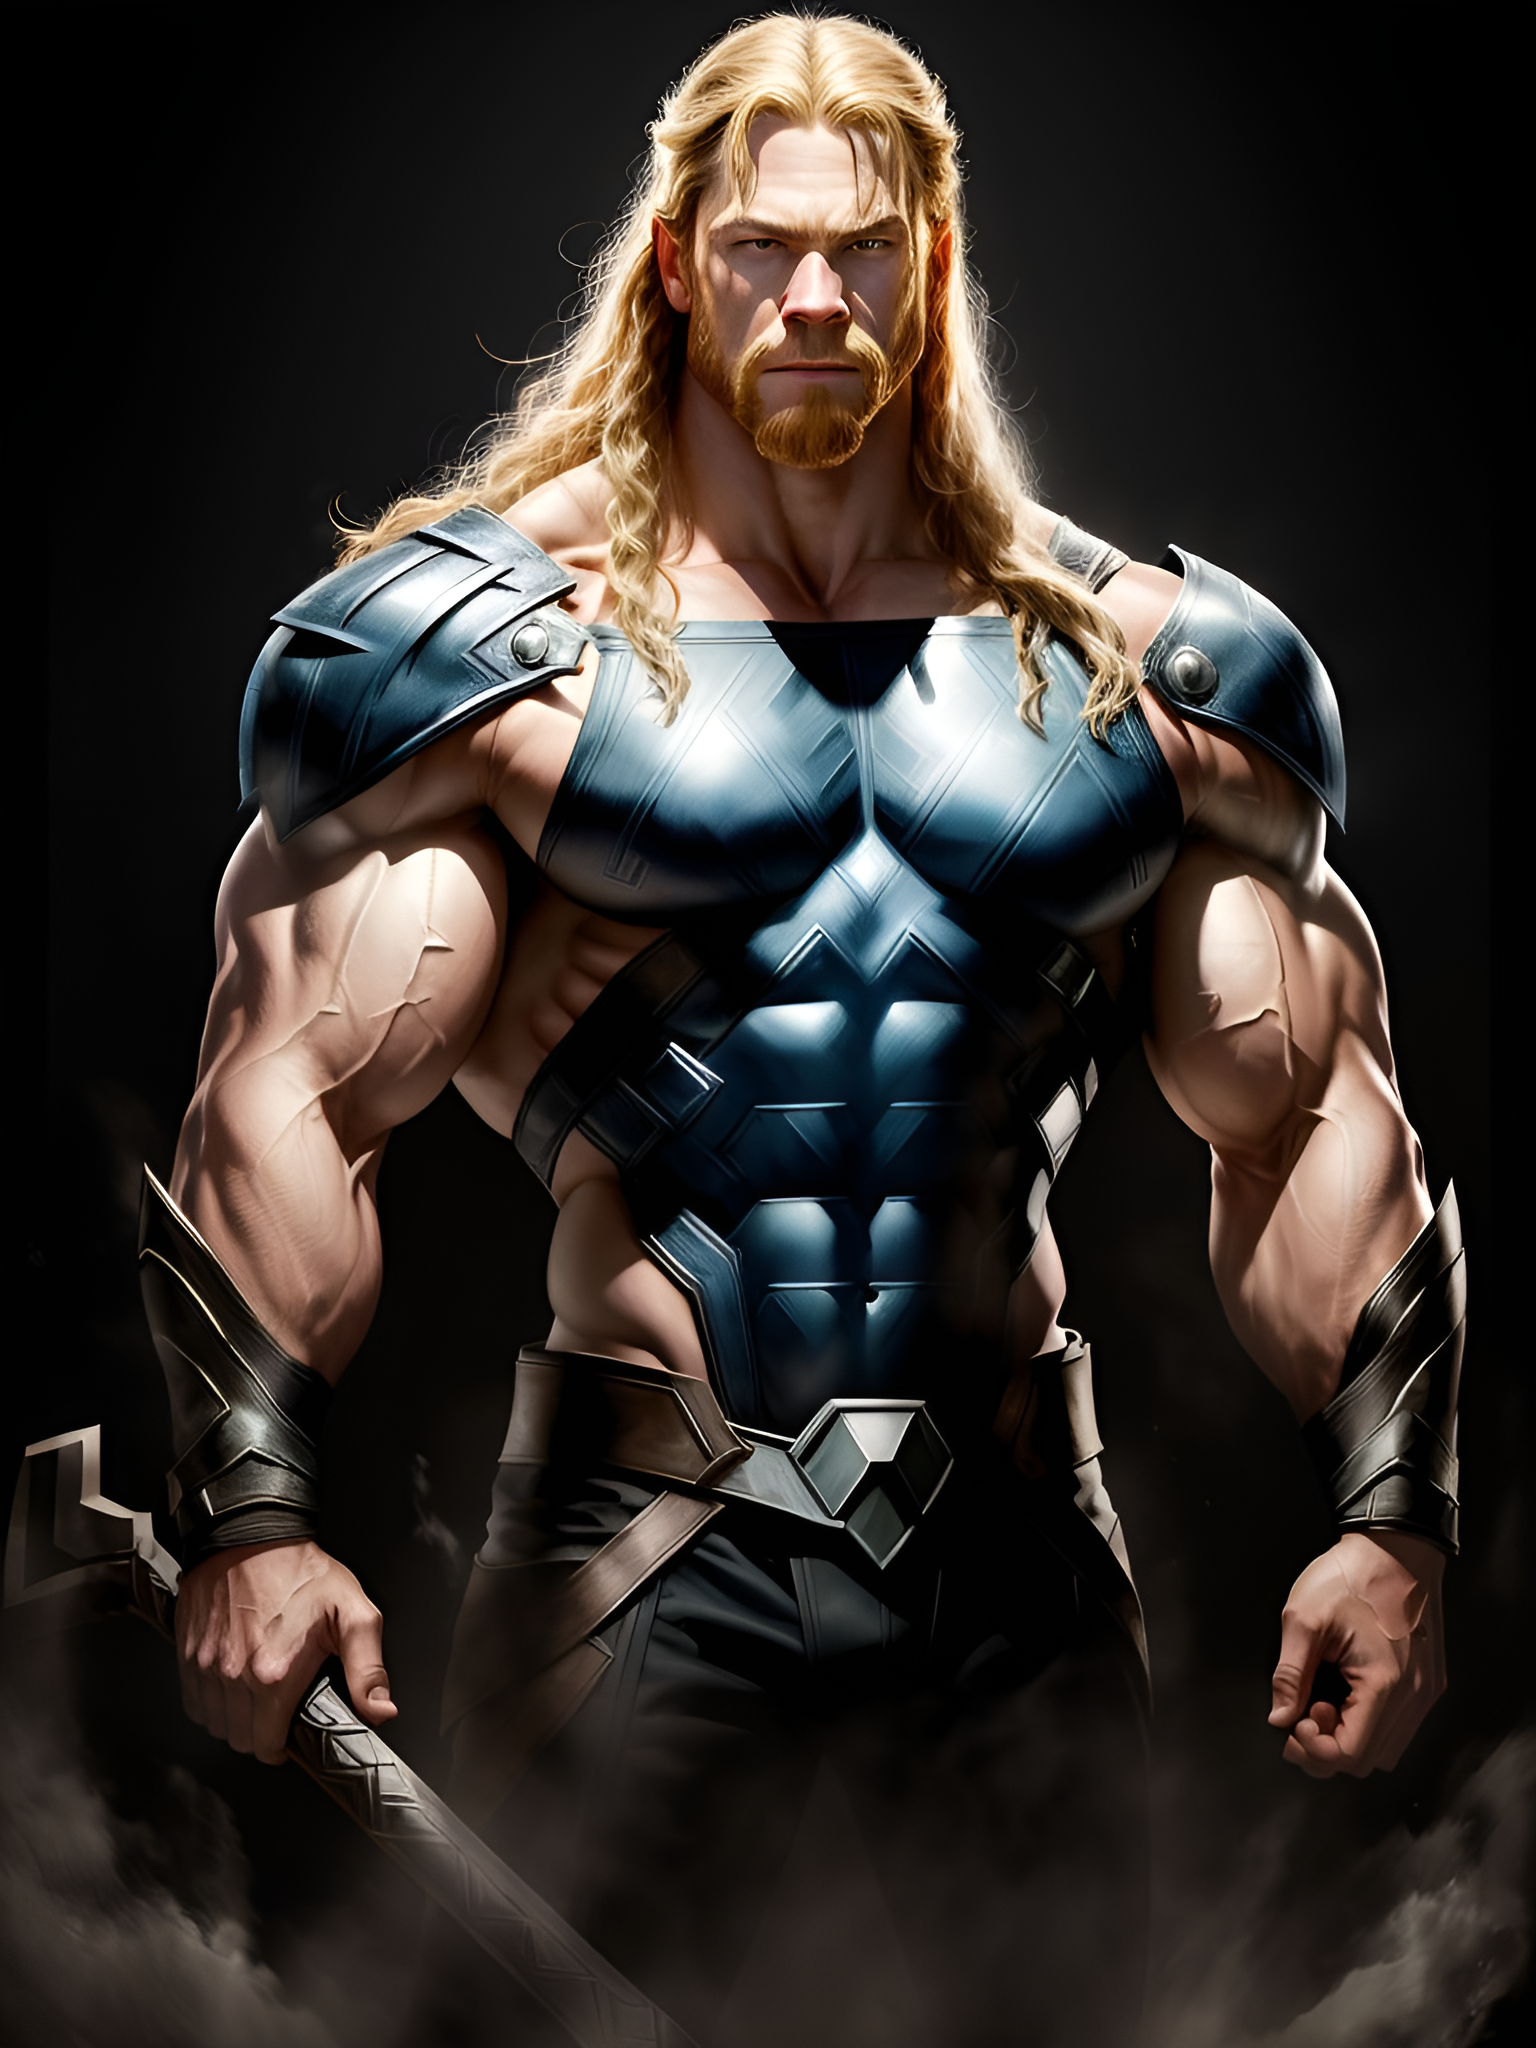 General 1536x2048 AI art Marvel Comics John Cena Thor (Marvel Comics) portrait display muscles beard weapon looking at viewer superhero